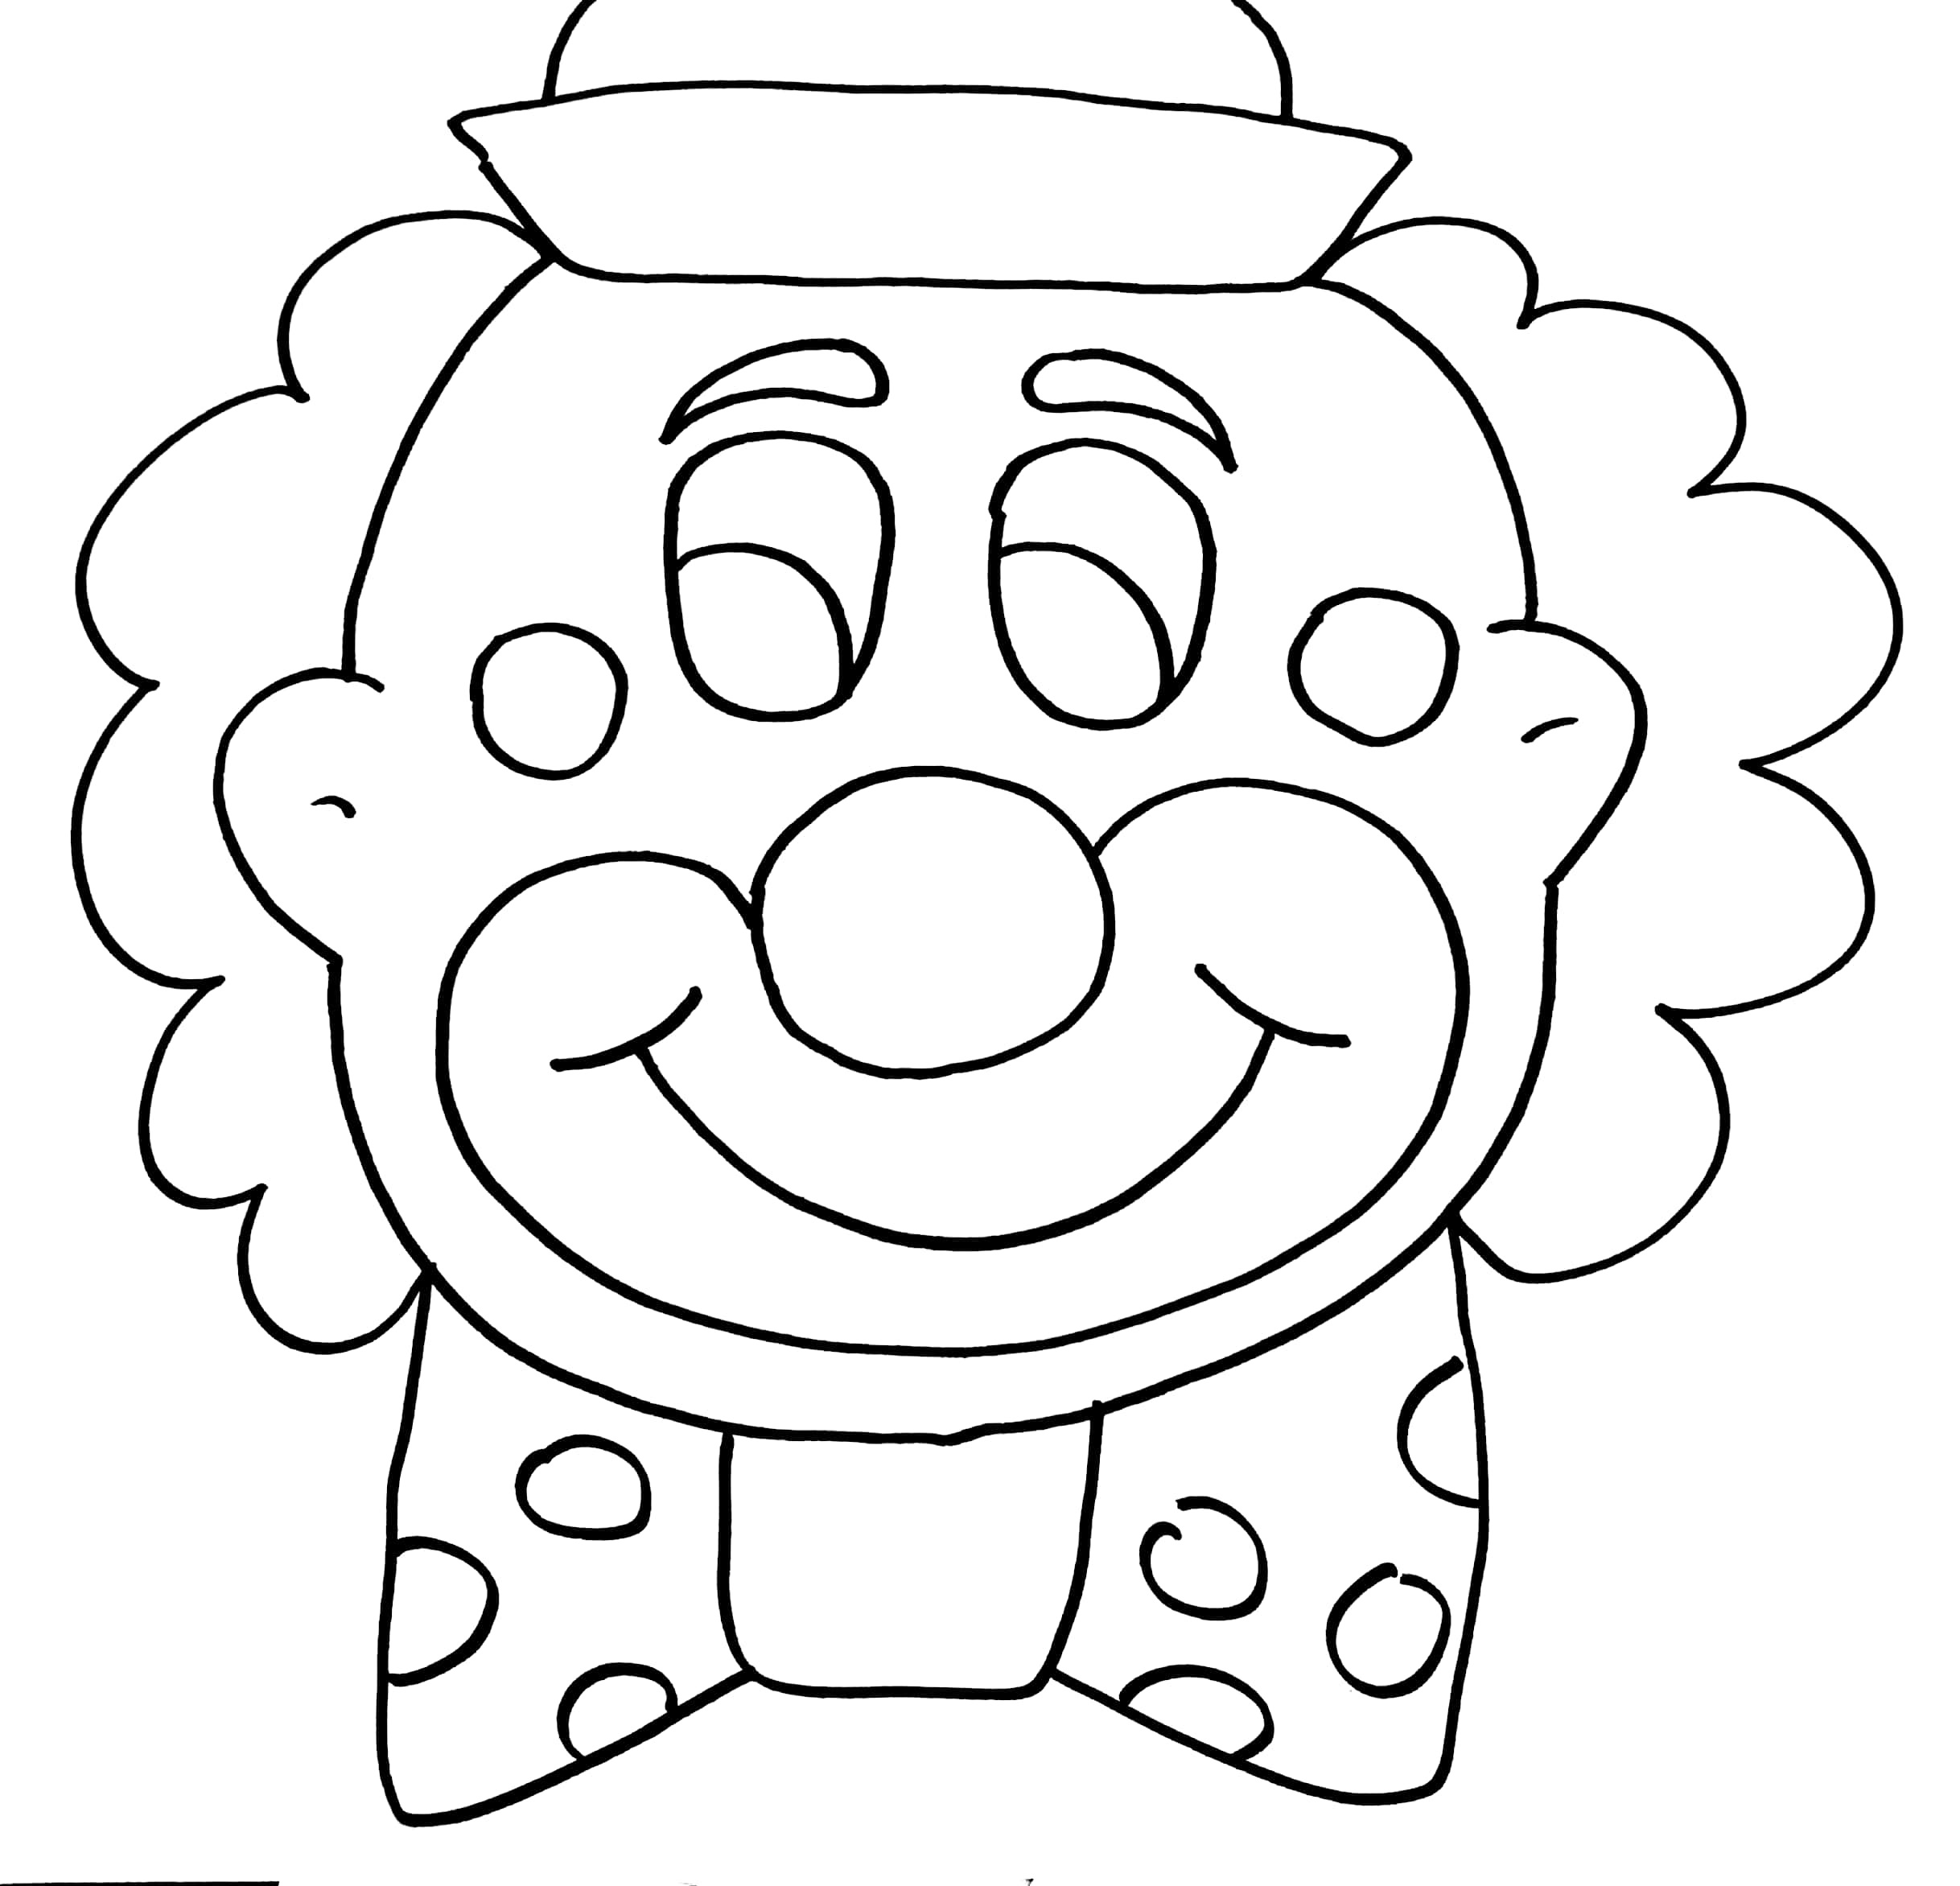 Раскраска клоун для детей 3 4 лет. Клоун раскраска. Клоун раскраска для детей. Лицо клоуна раскраска. Лицо клоуна раскраски для детей.